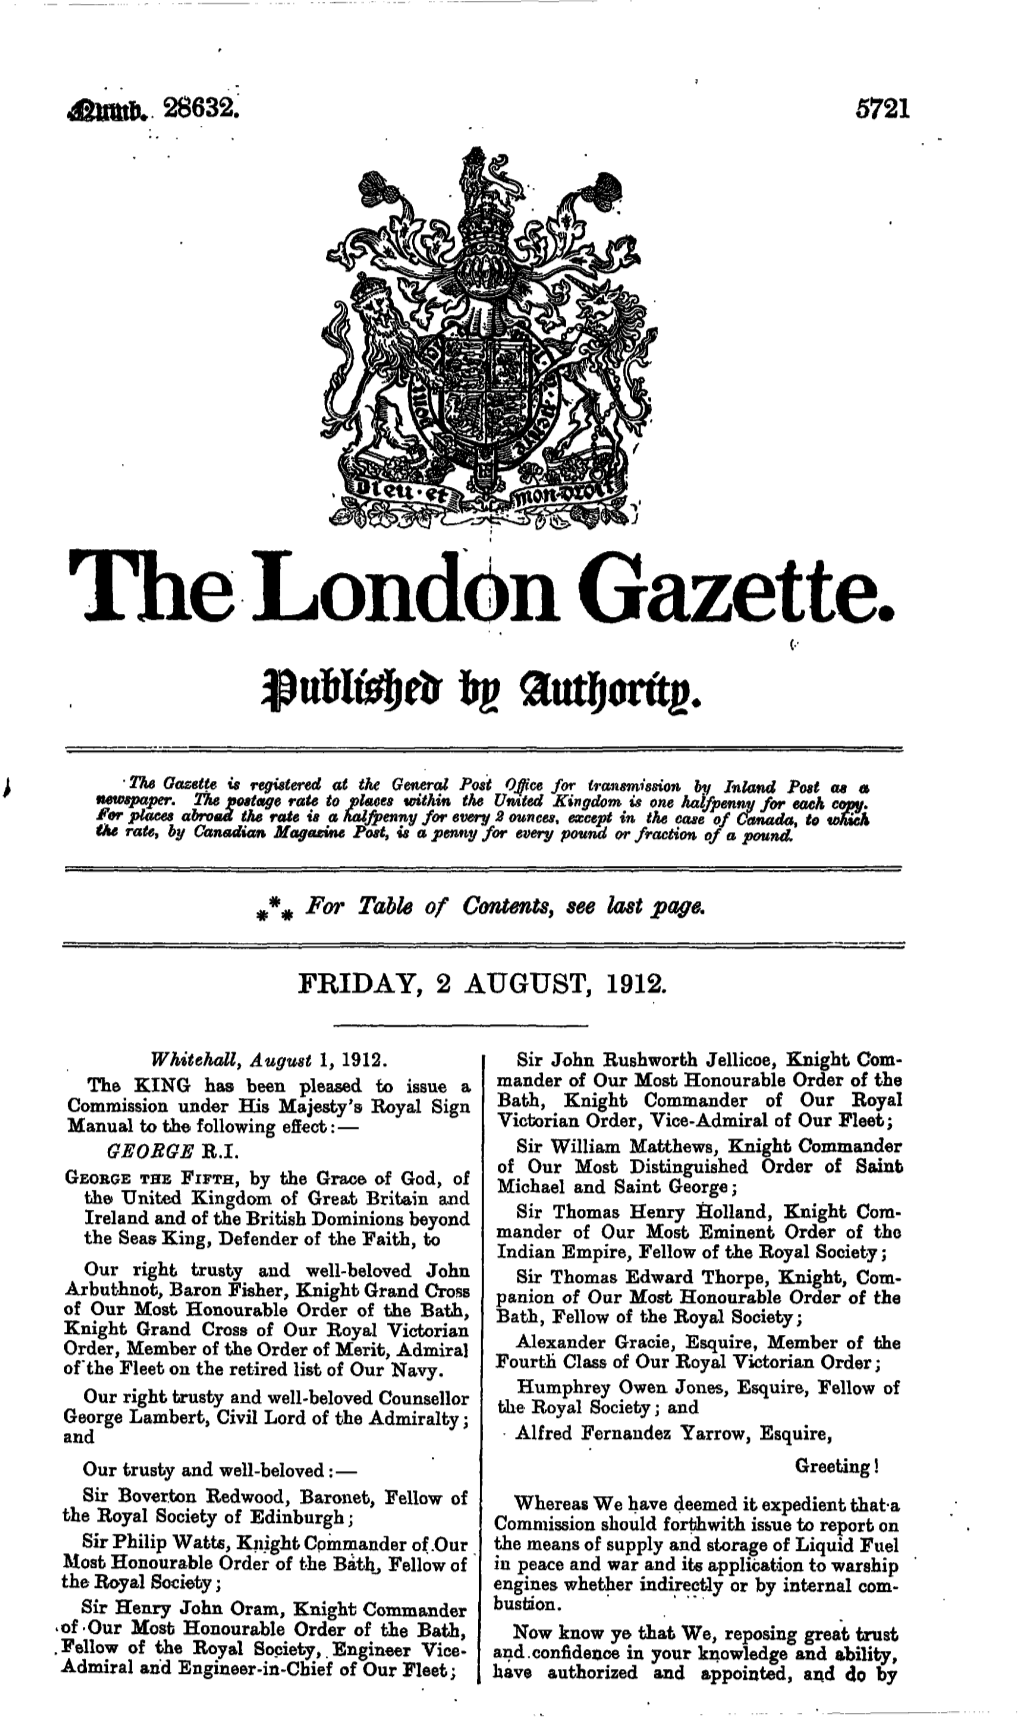 The London Gazette, Jig